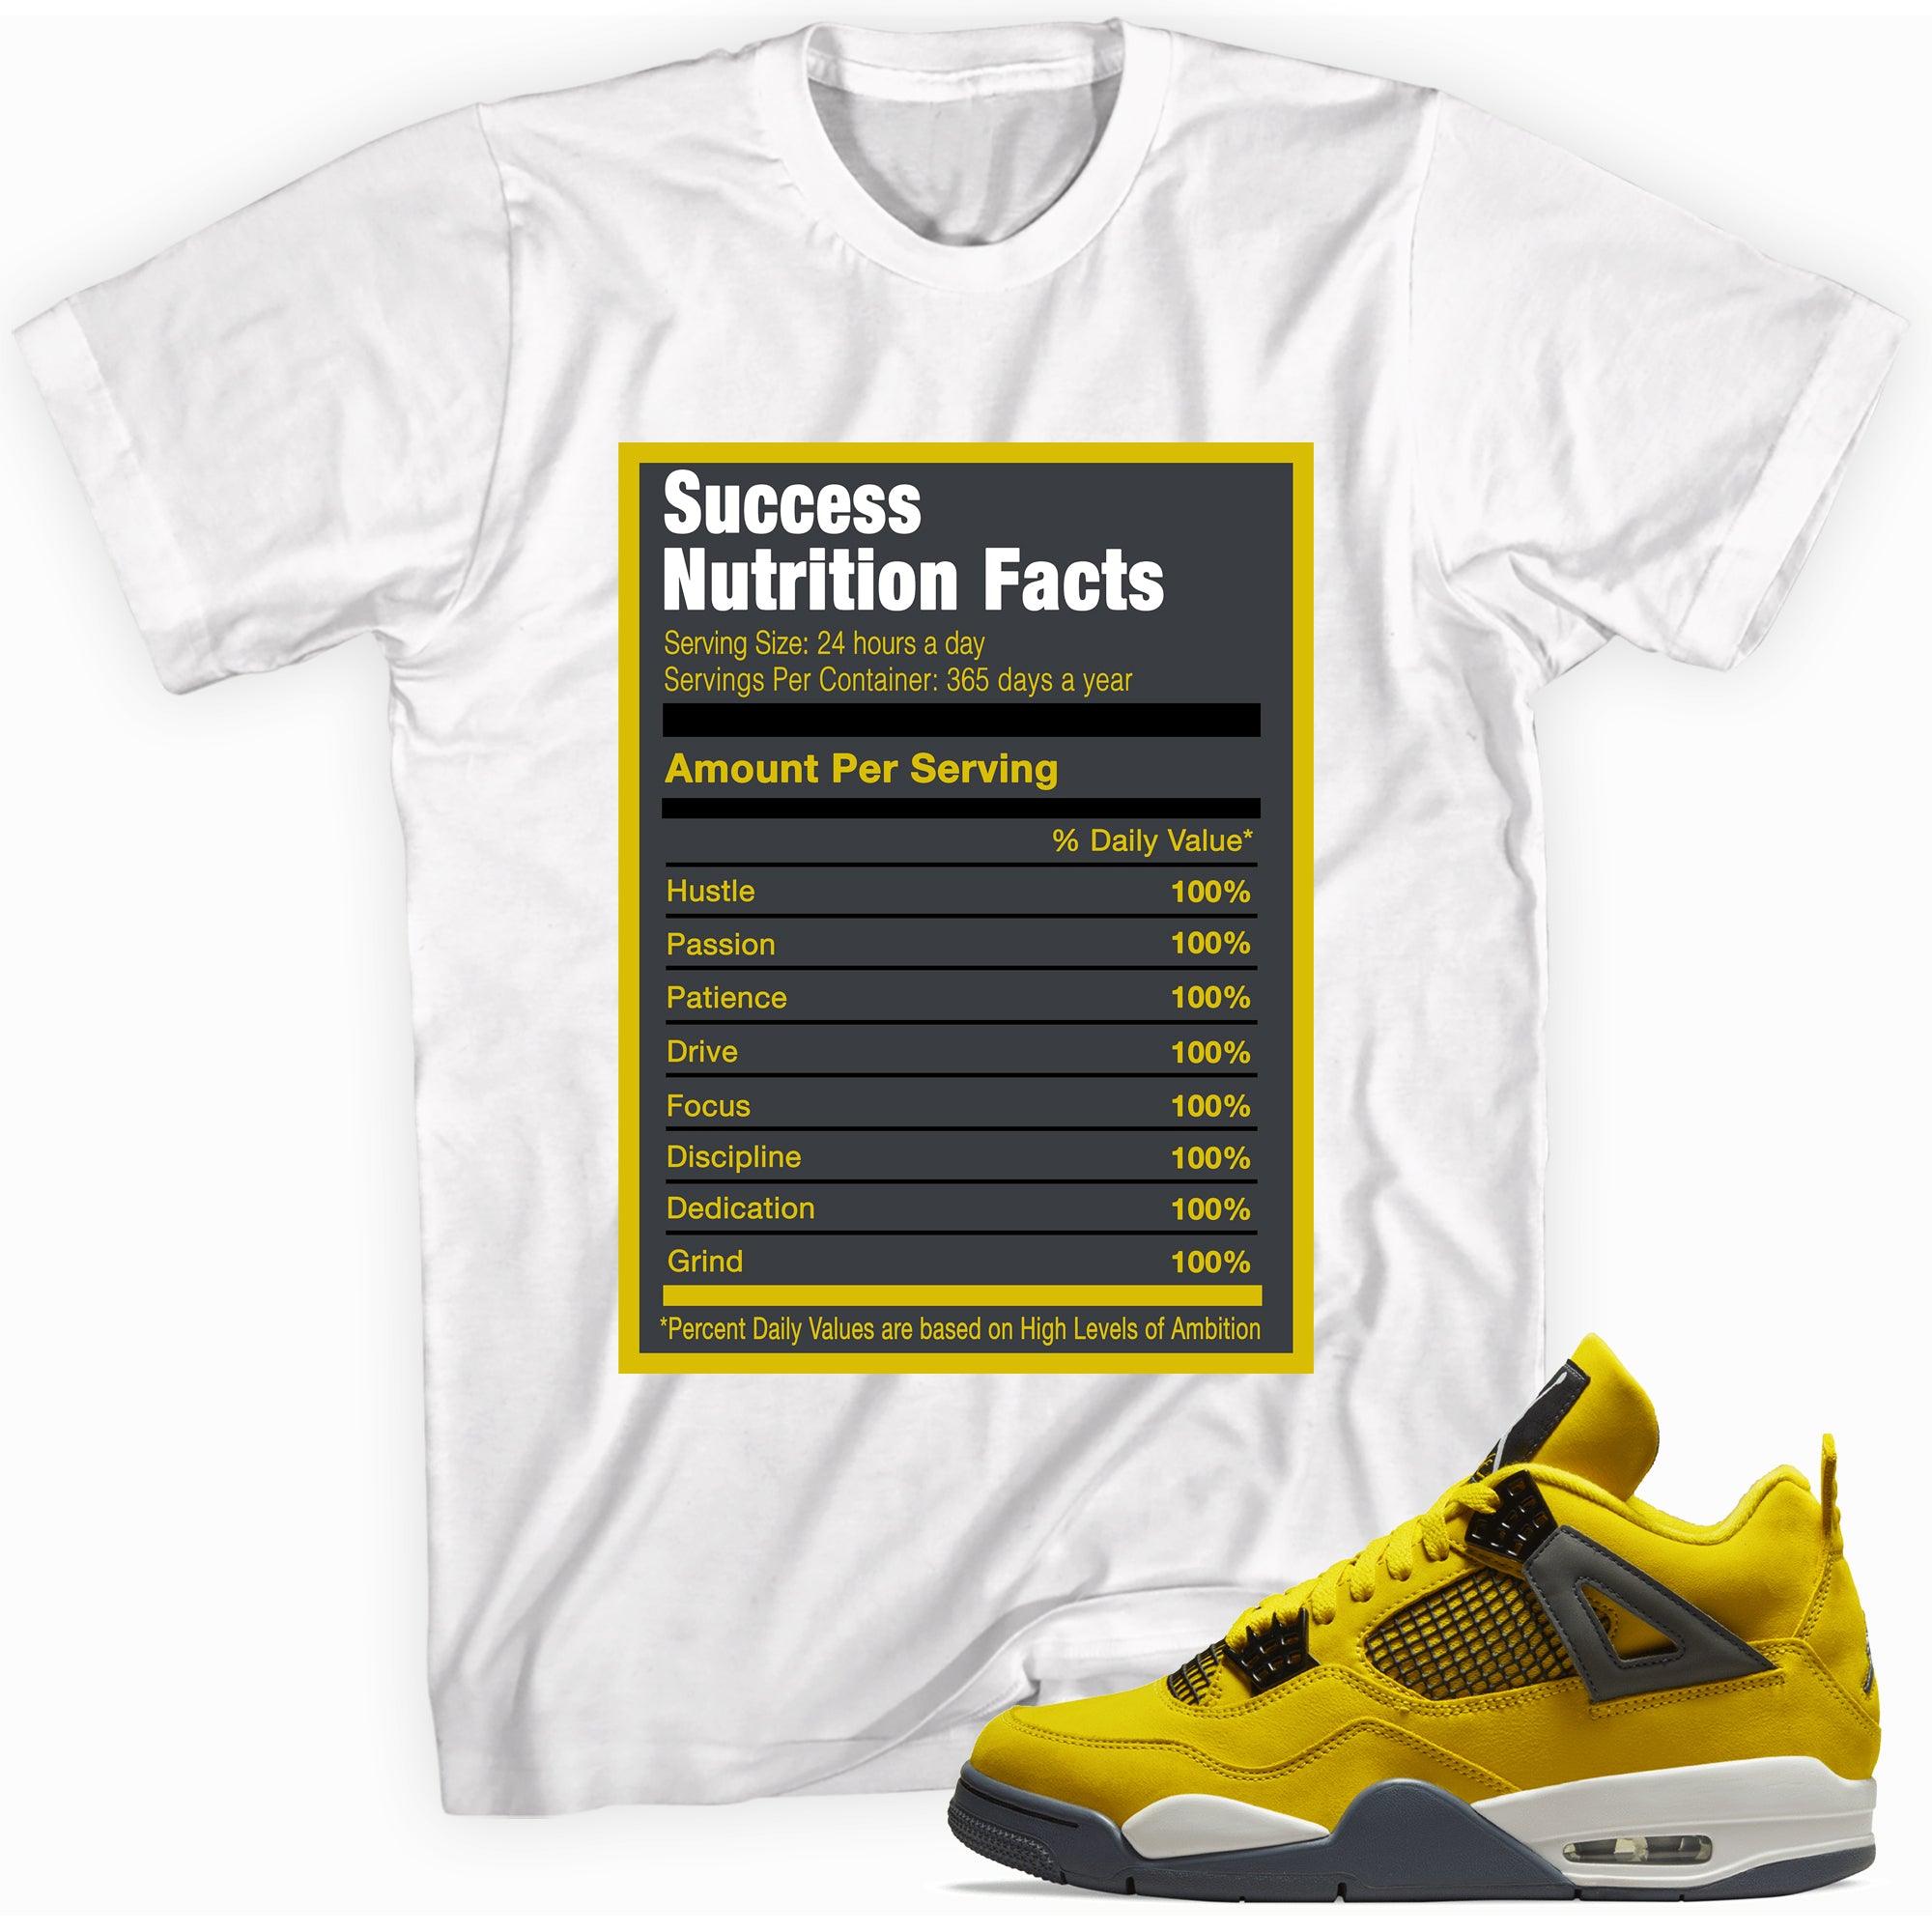 Success Nutrition Facts Shirt Jordan 4s Retro Lightning photo